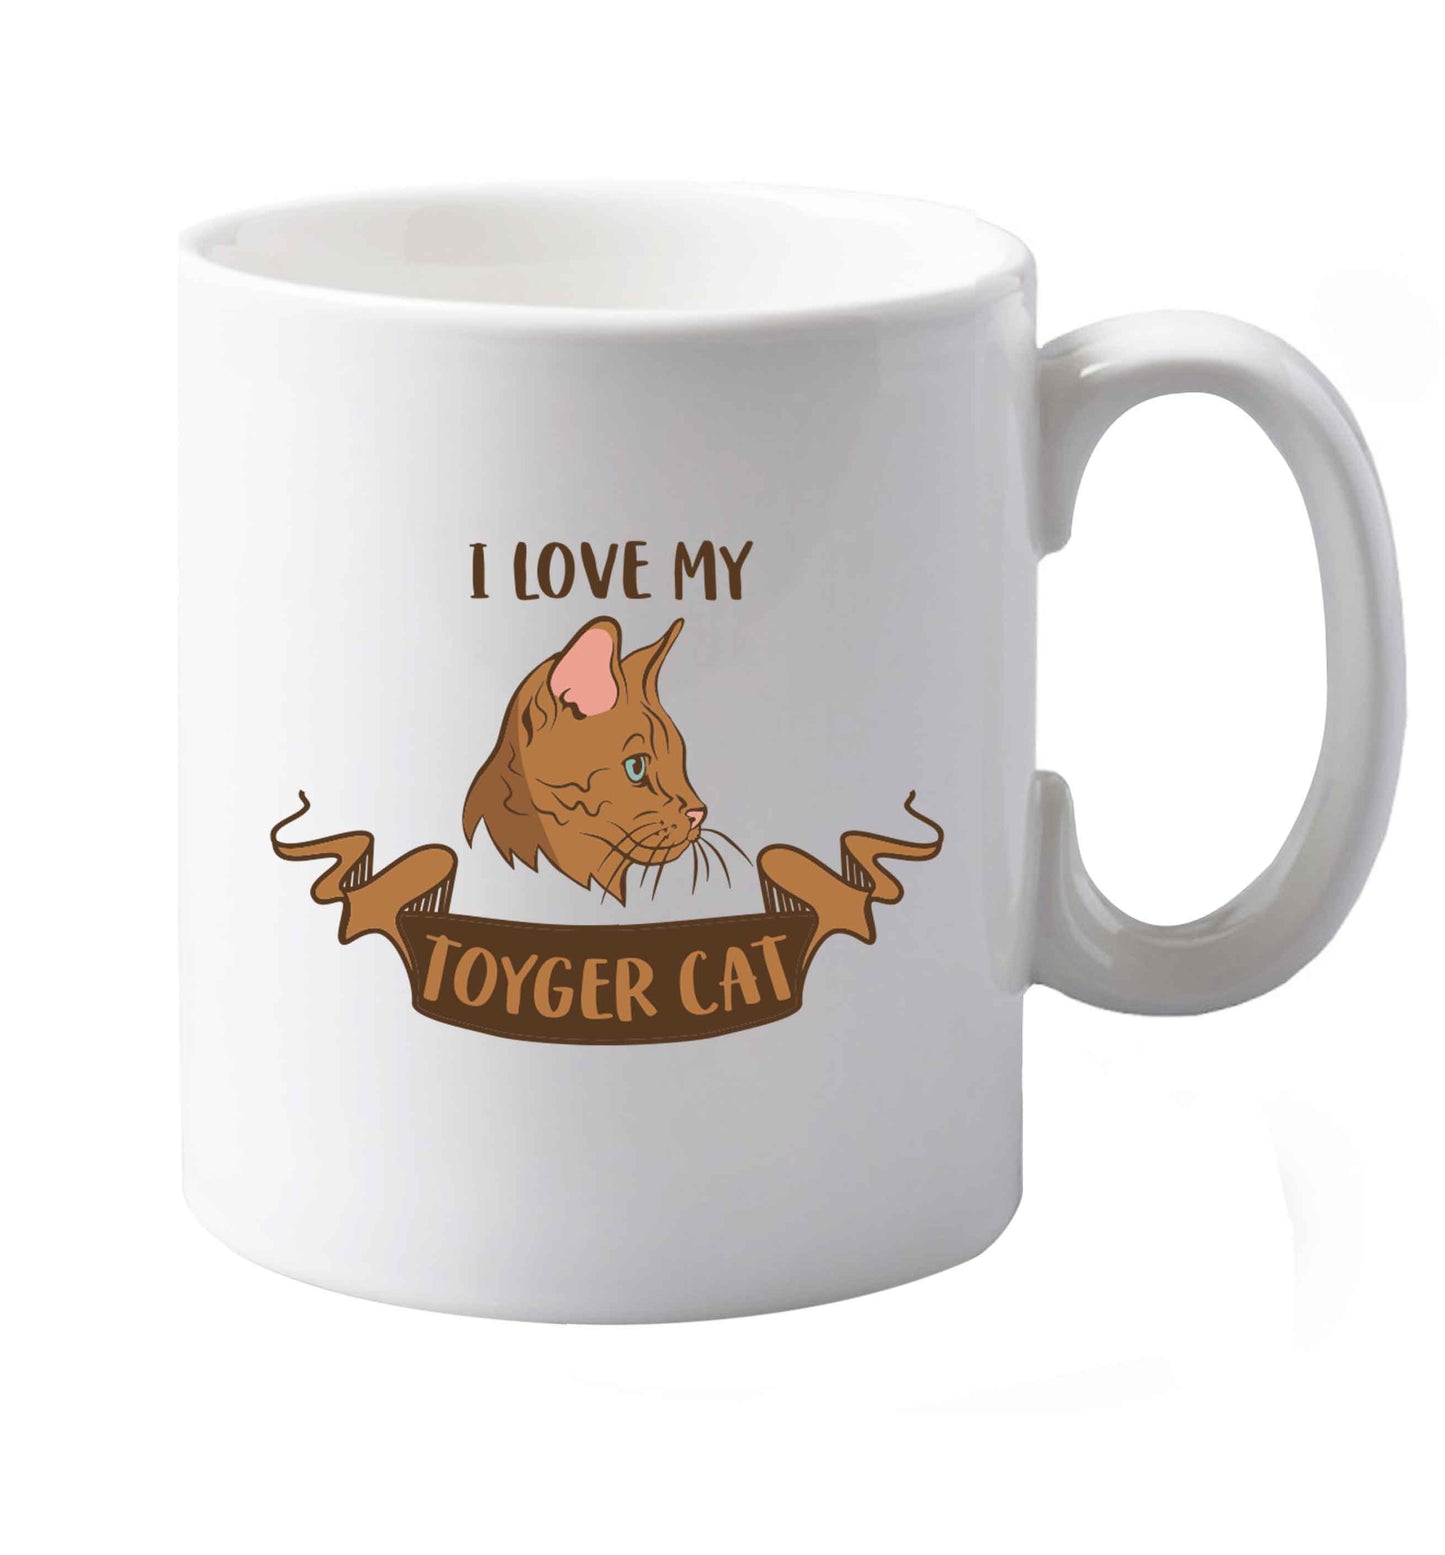 10 oz I love my toyger cat ceramic mug both sides